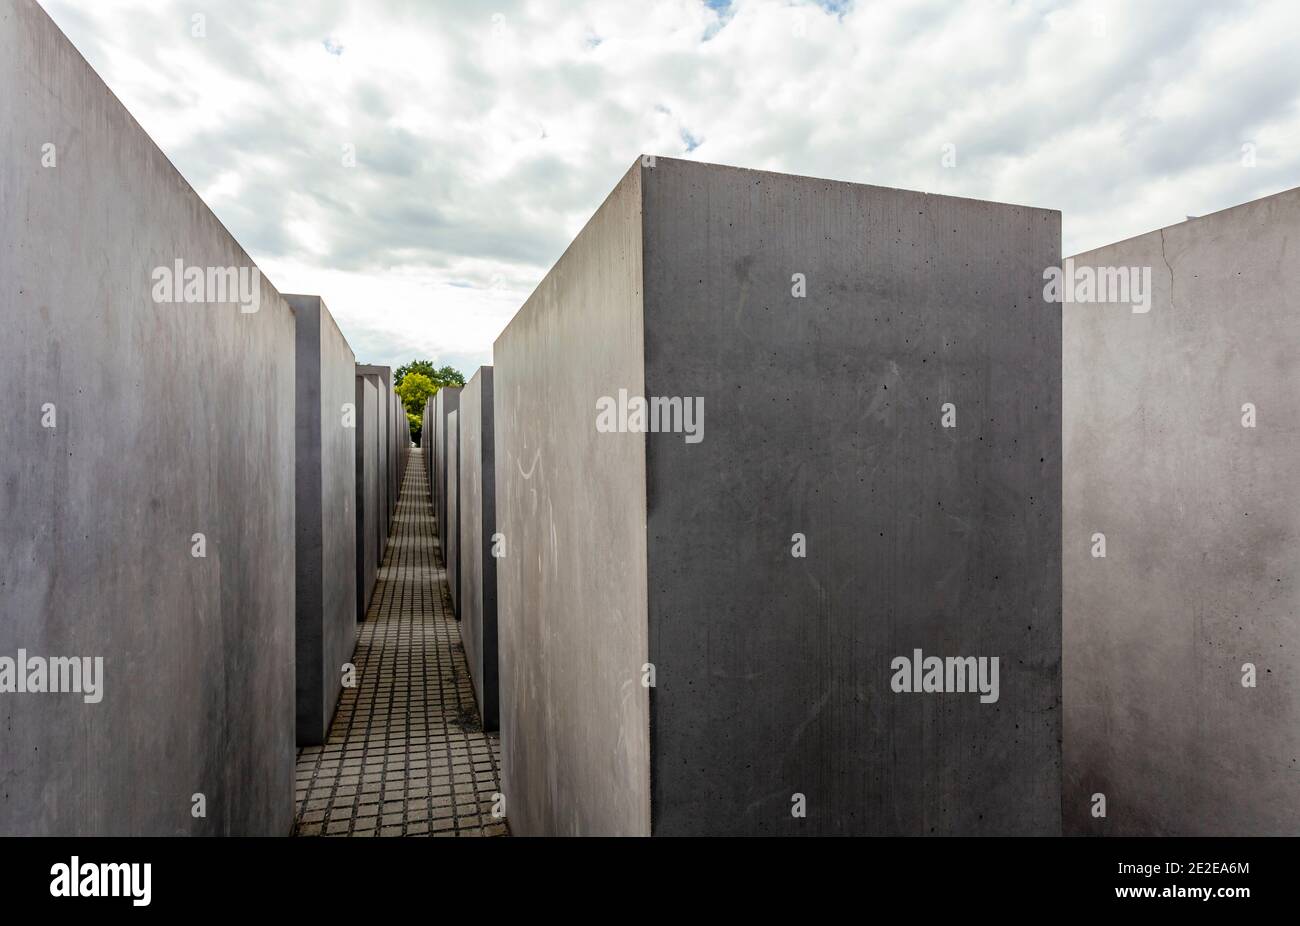 Olocausto-Mahnmal, Berlino. Memoriale dell'Olocausto "Denkmal für die ermordeten Juden Europas" Foto Stock